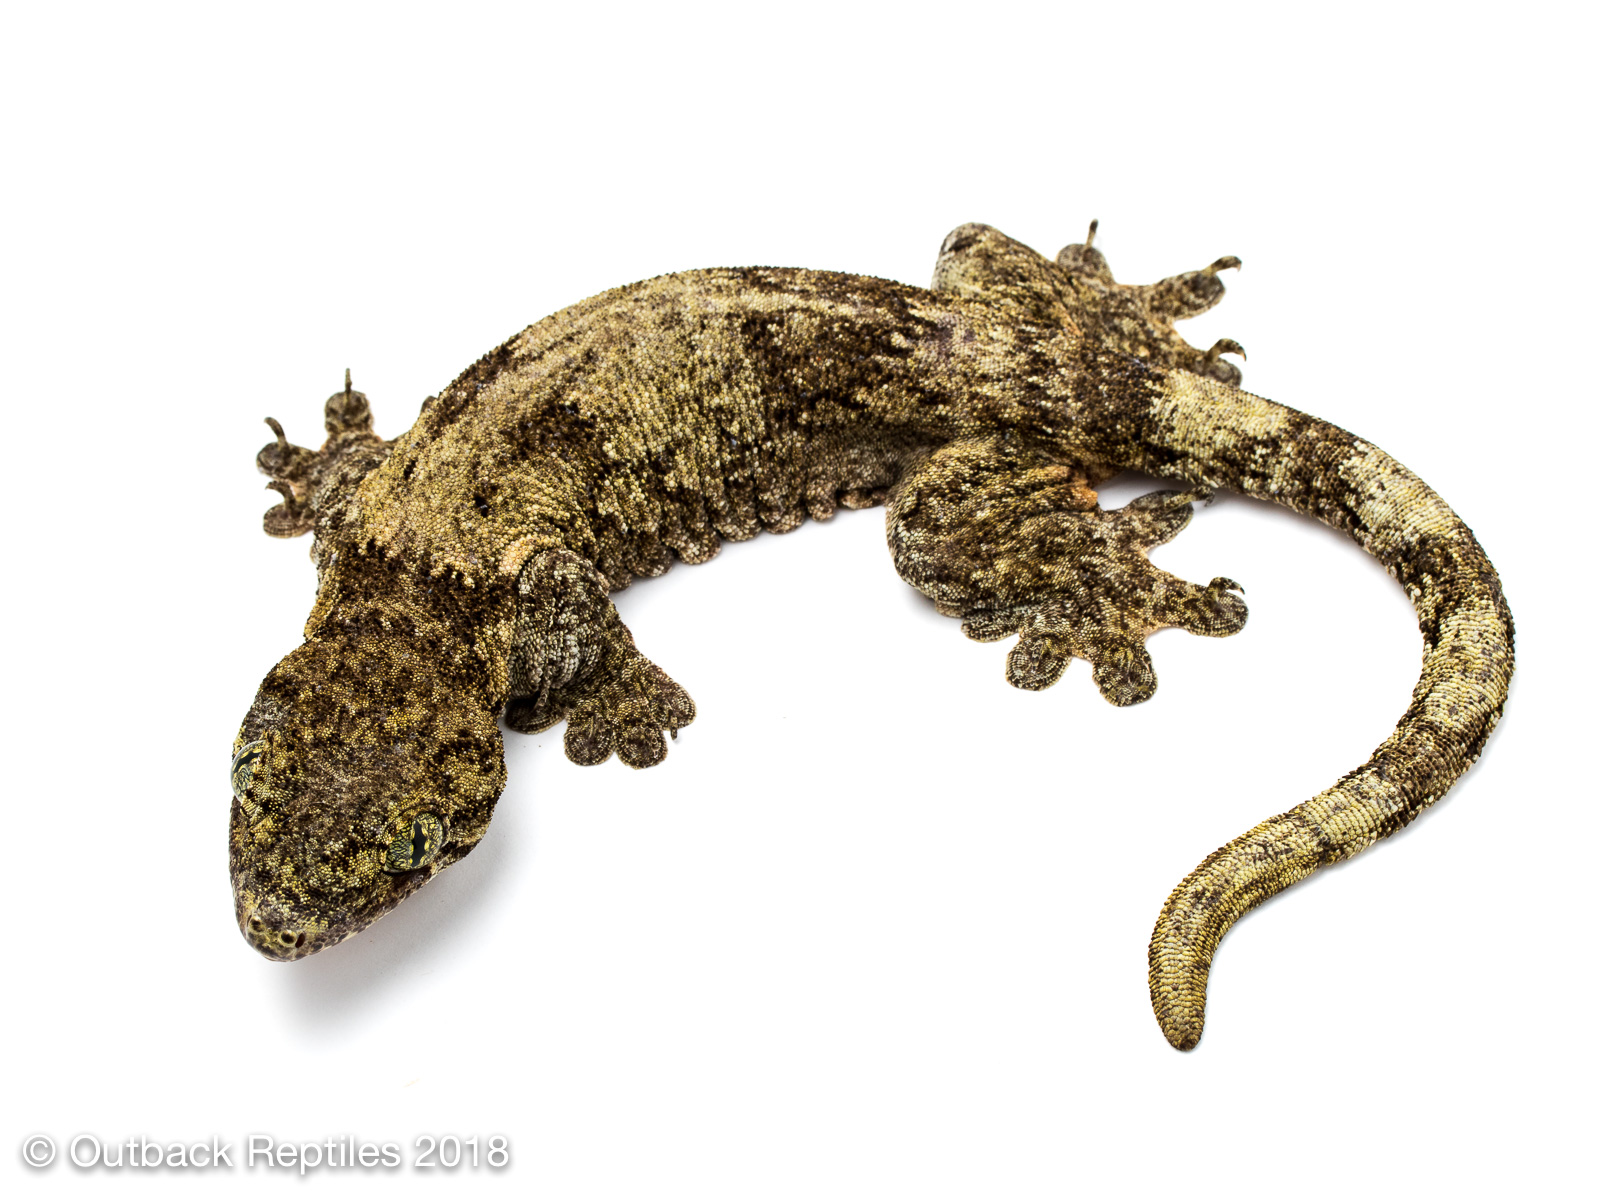 Vorax Gecko - Giant Halmahera Gecko - Gehyra marginata